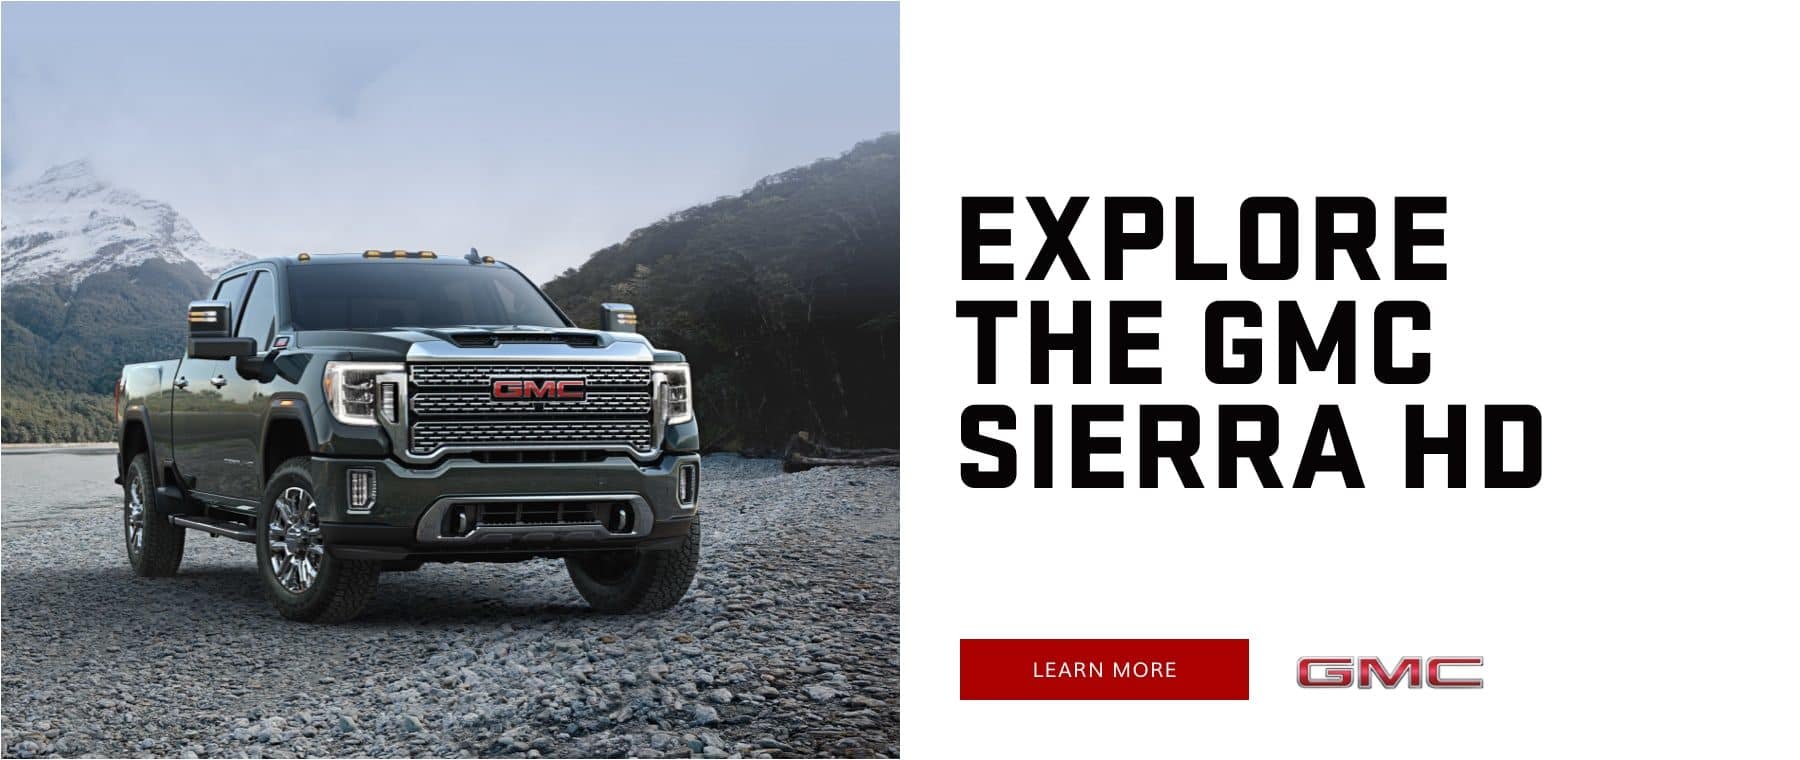 Explore the GMC Sierra HD